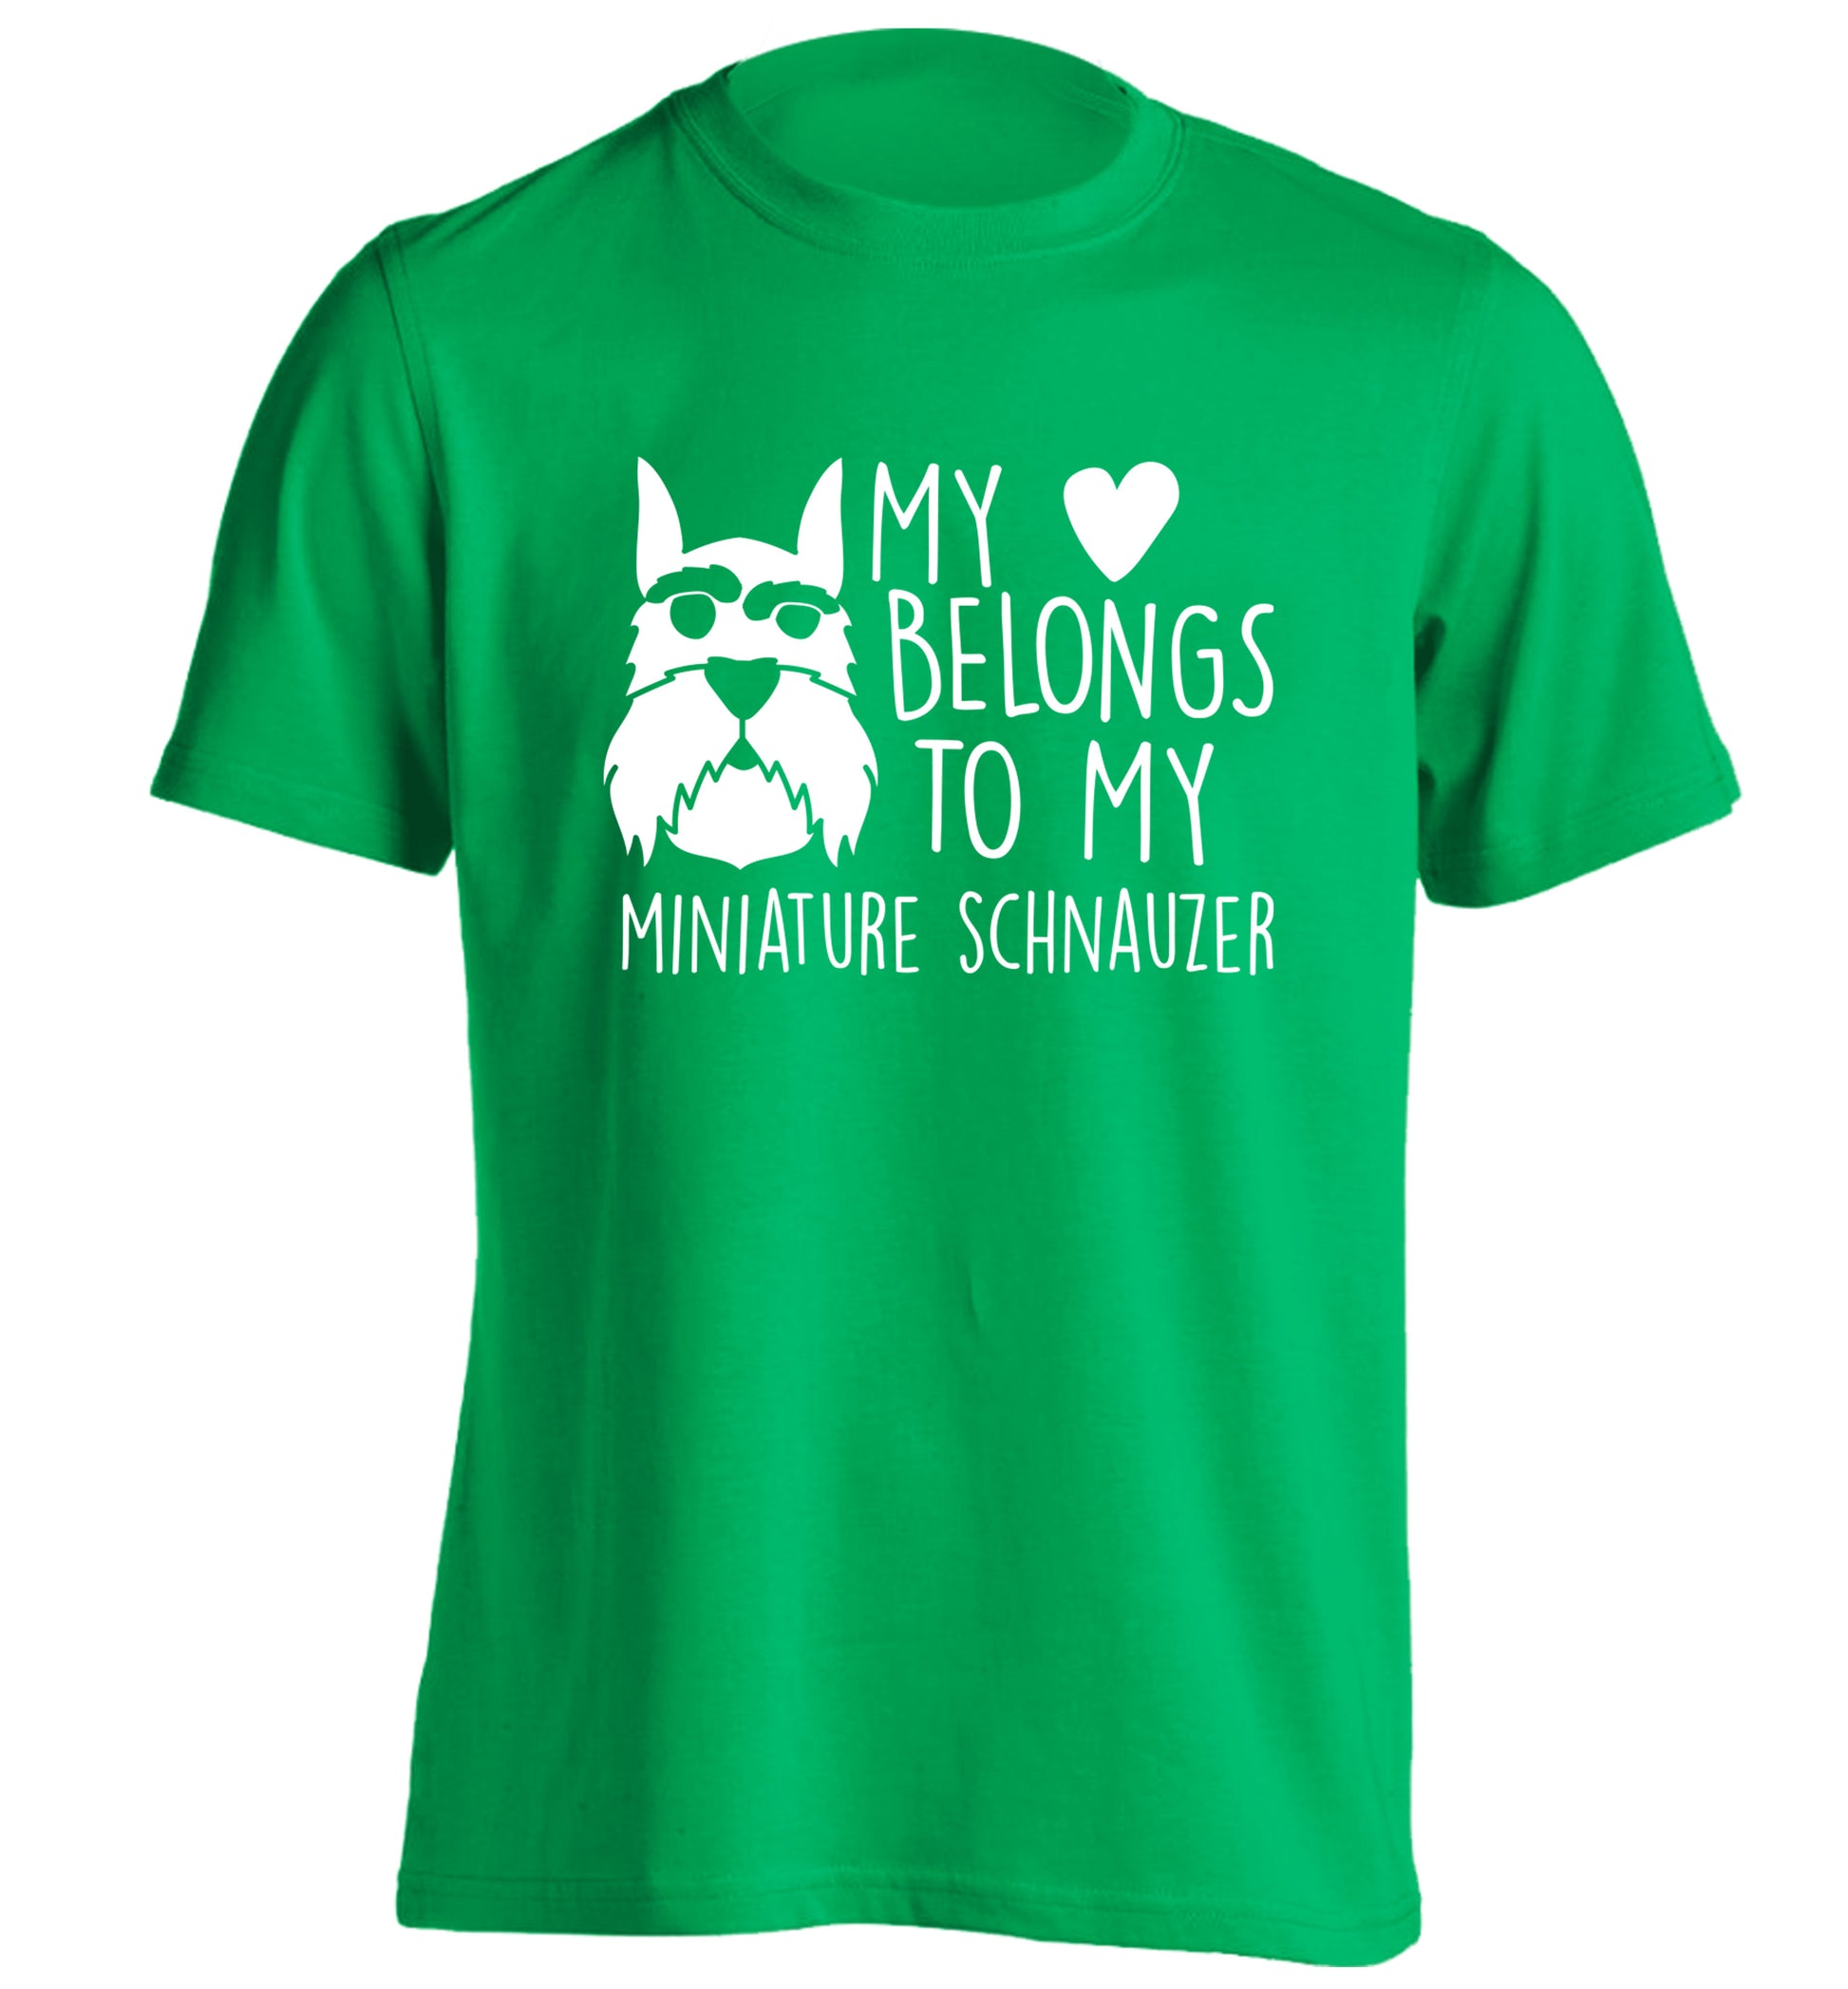 My heart belongs to my miniature schnauzer adults unisex green Tshirt 2XL